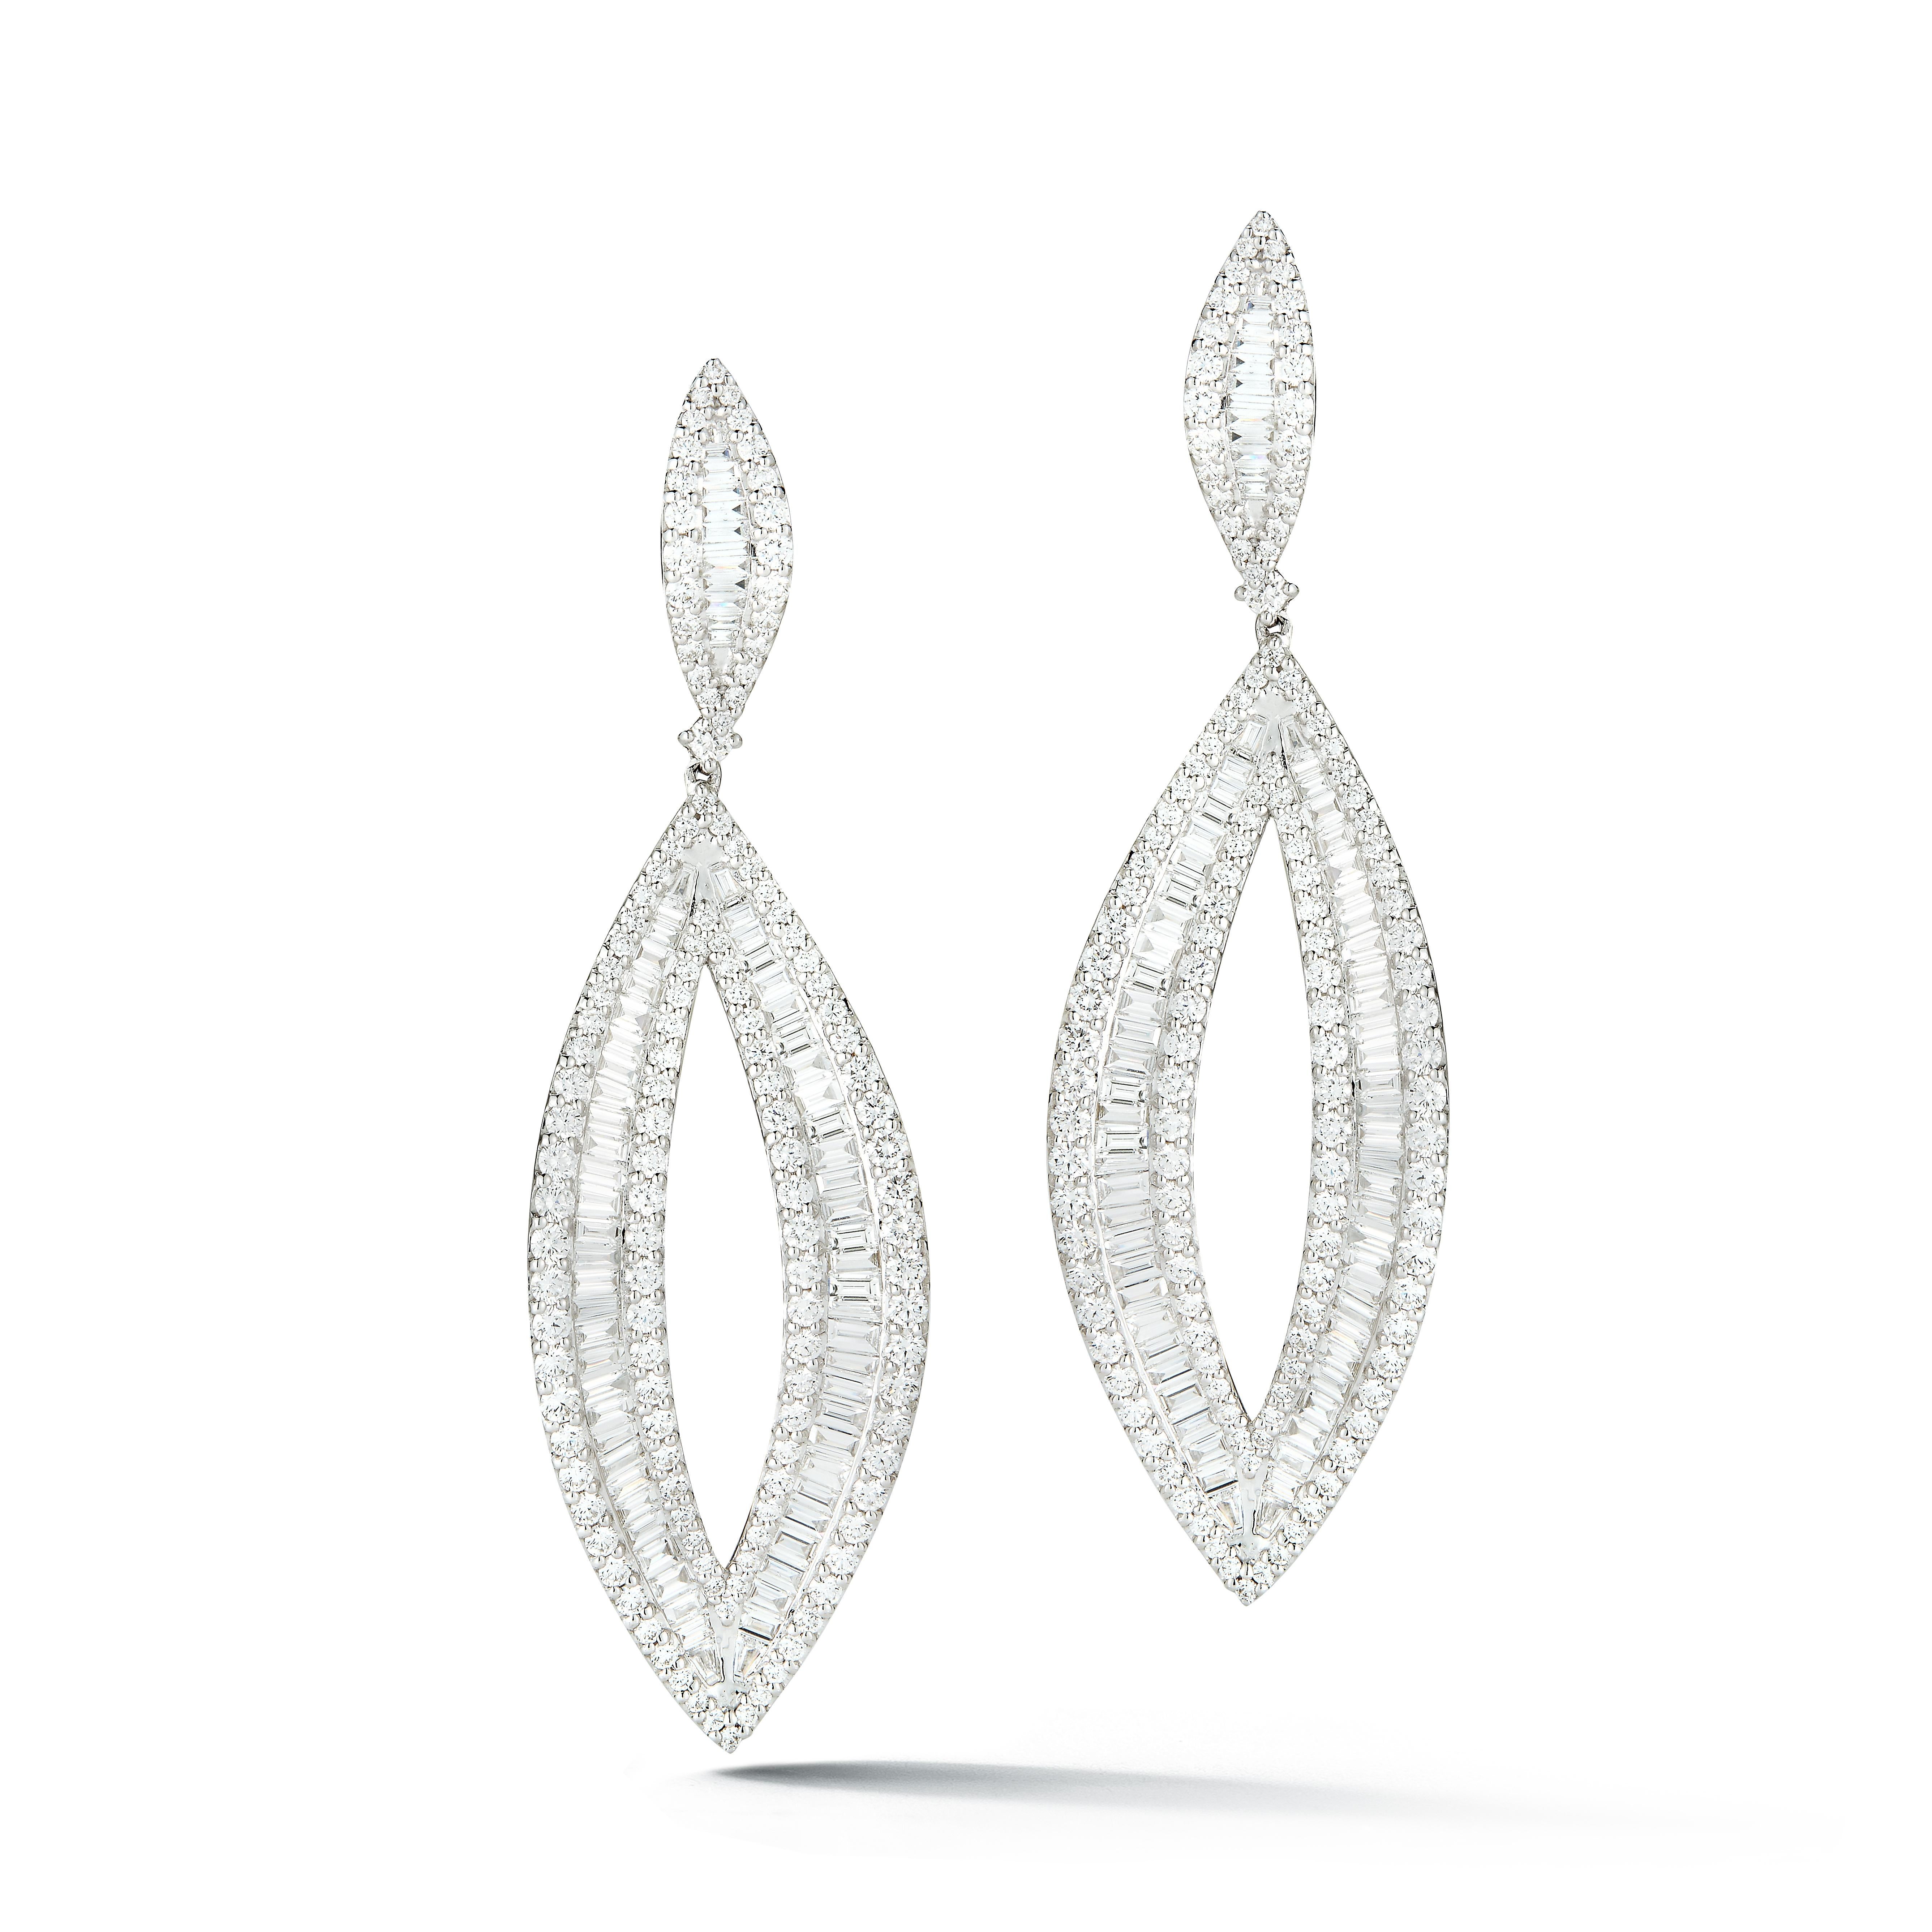 Elegant 18K White Gold Diamond Earrings set with 4.83 Carat baguette-cut diamonds and 4.67 Carats round diamonds, total weight 9.50 Carat diamonds.